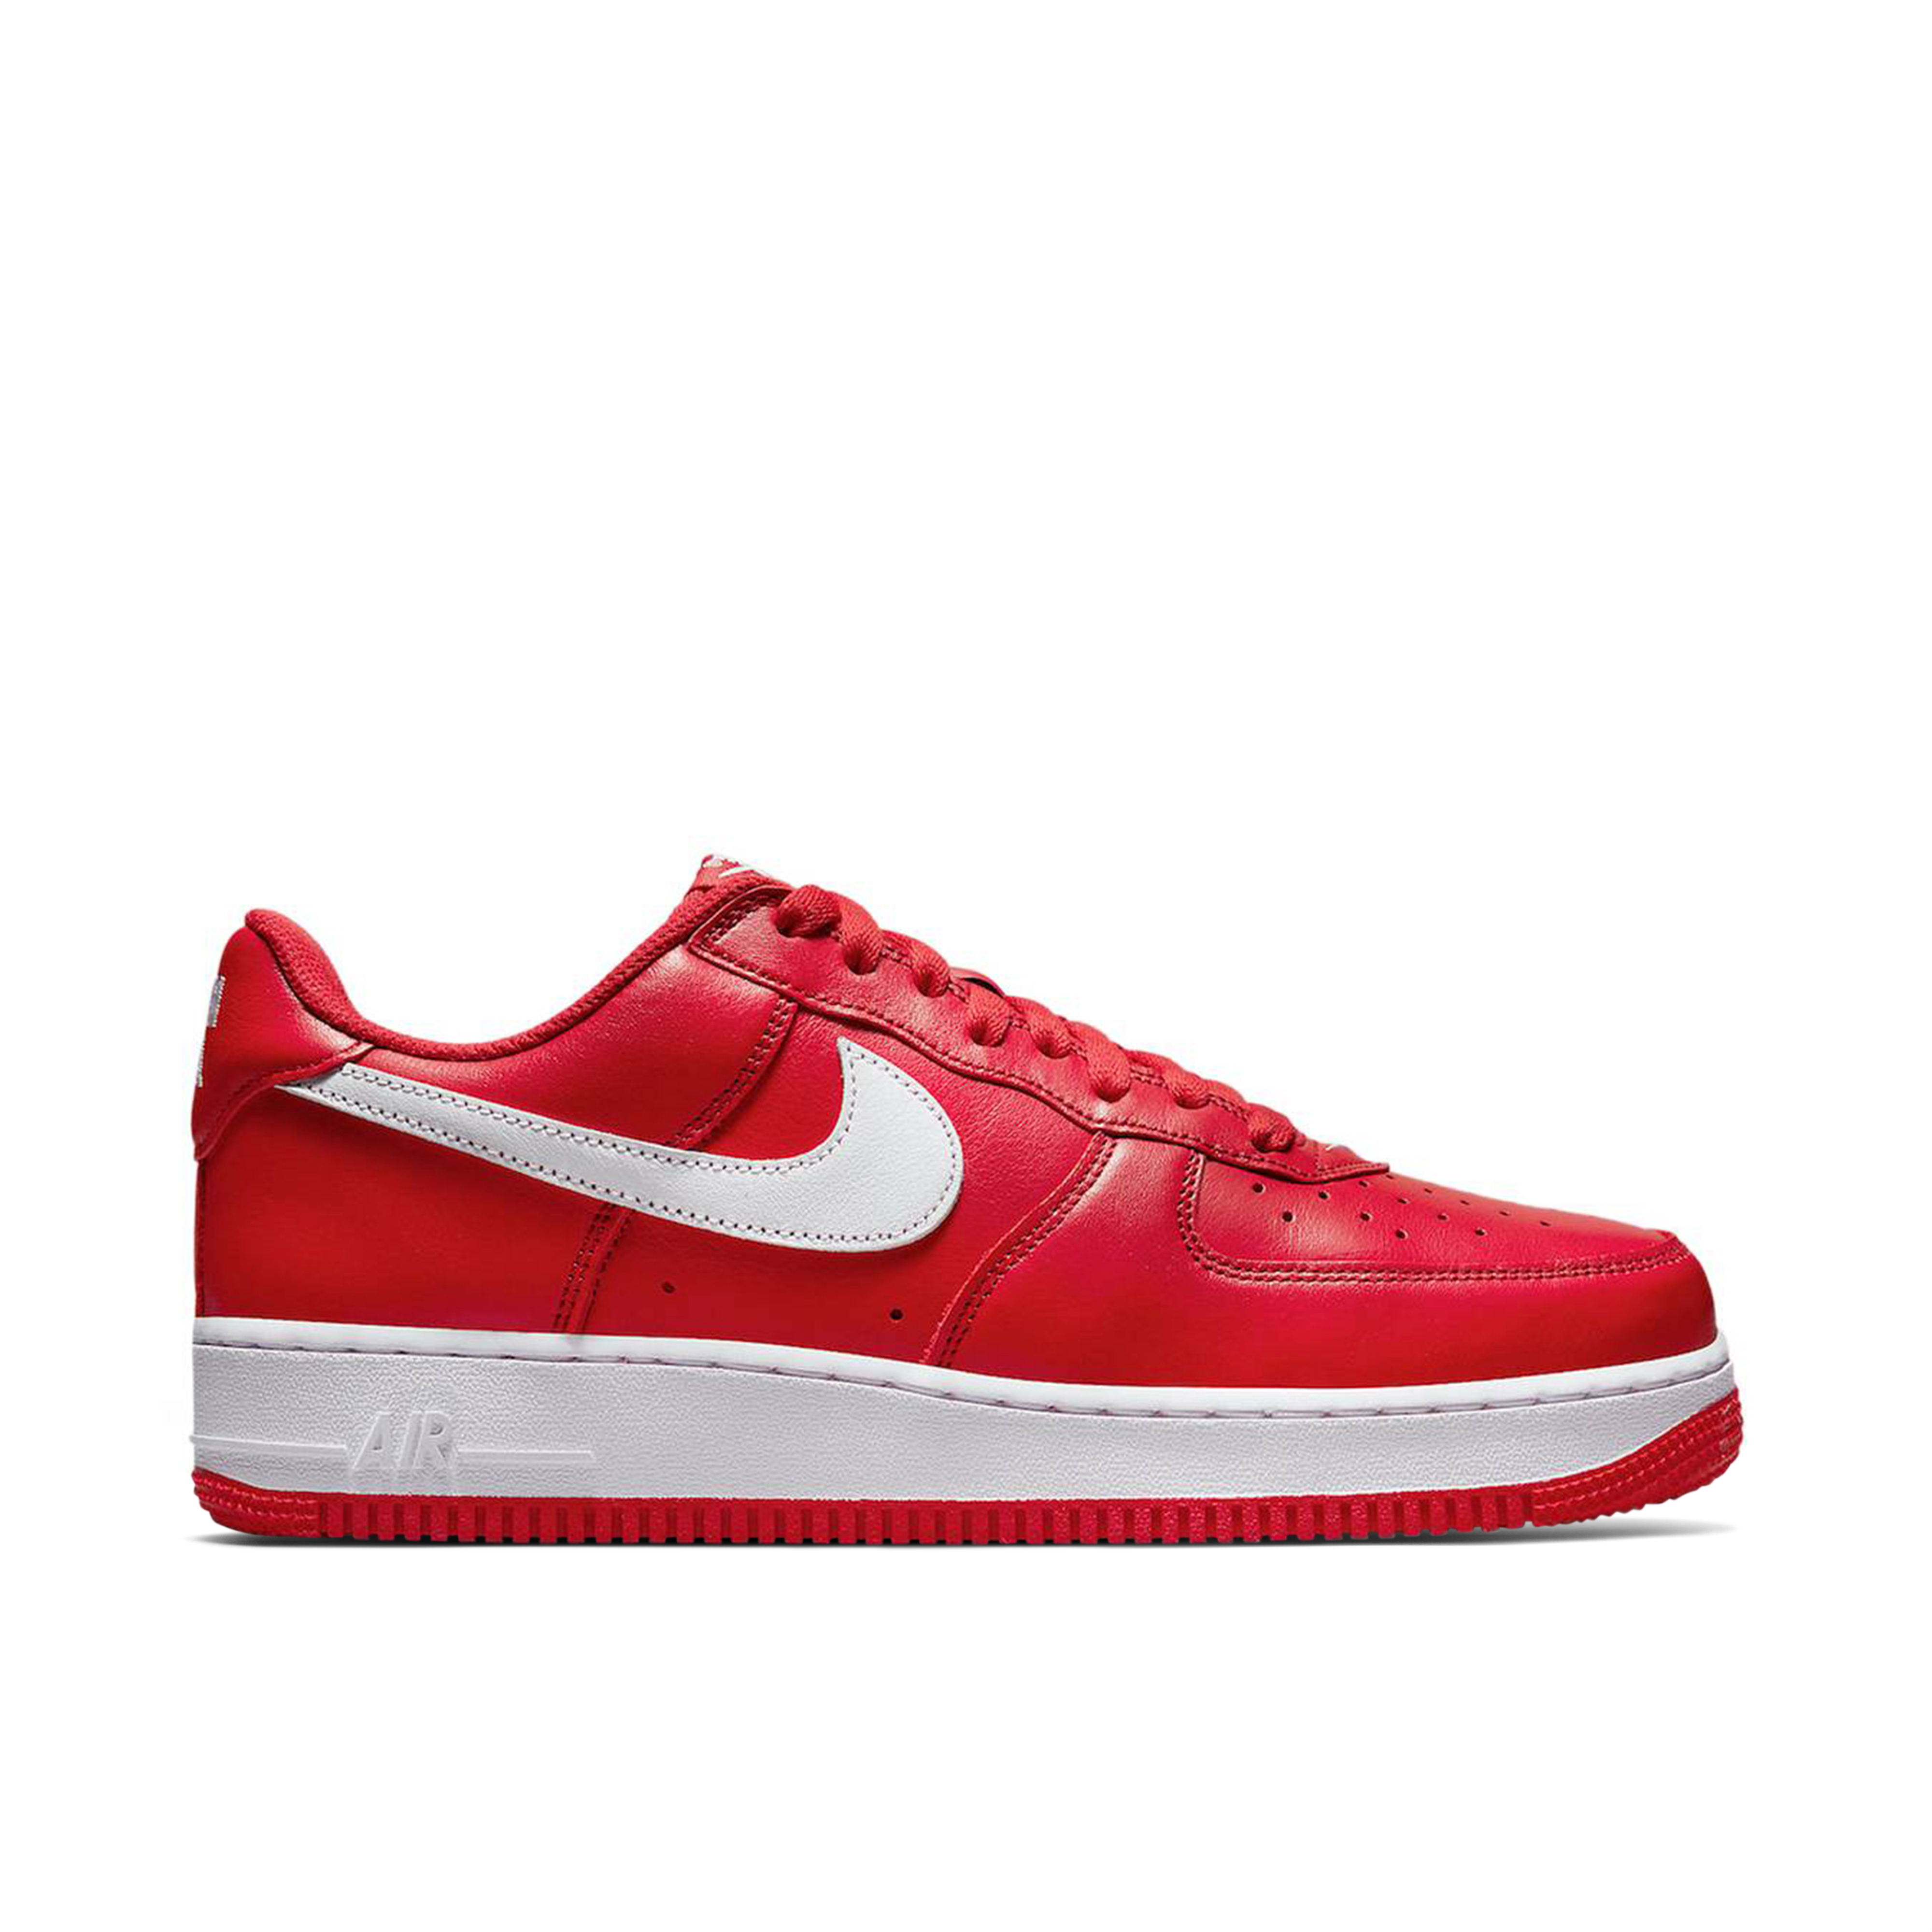 Nike Air Force 1 Mens NBA University Red Black Shoes 13 (823511-604) Low LV8